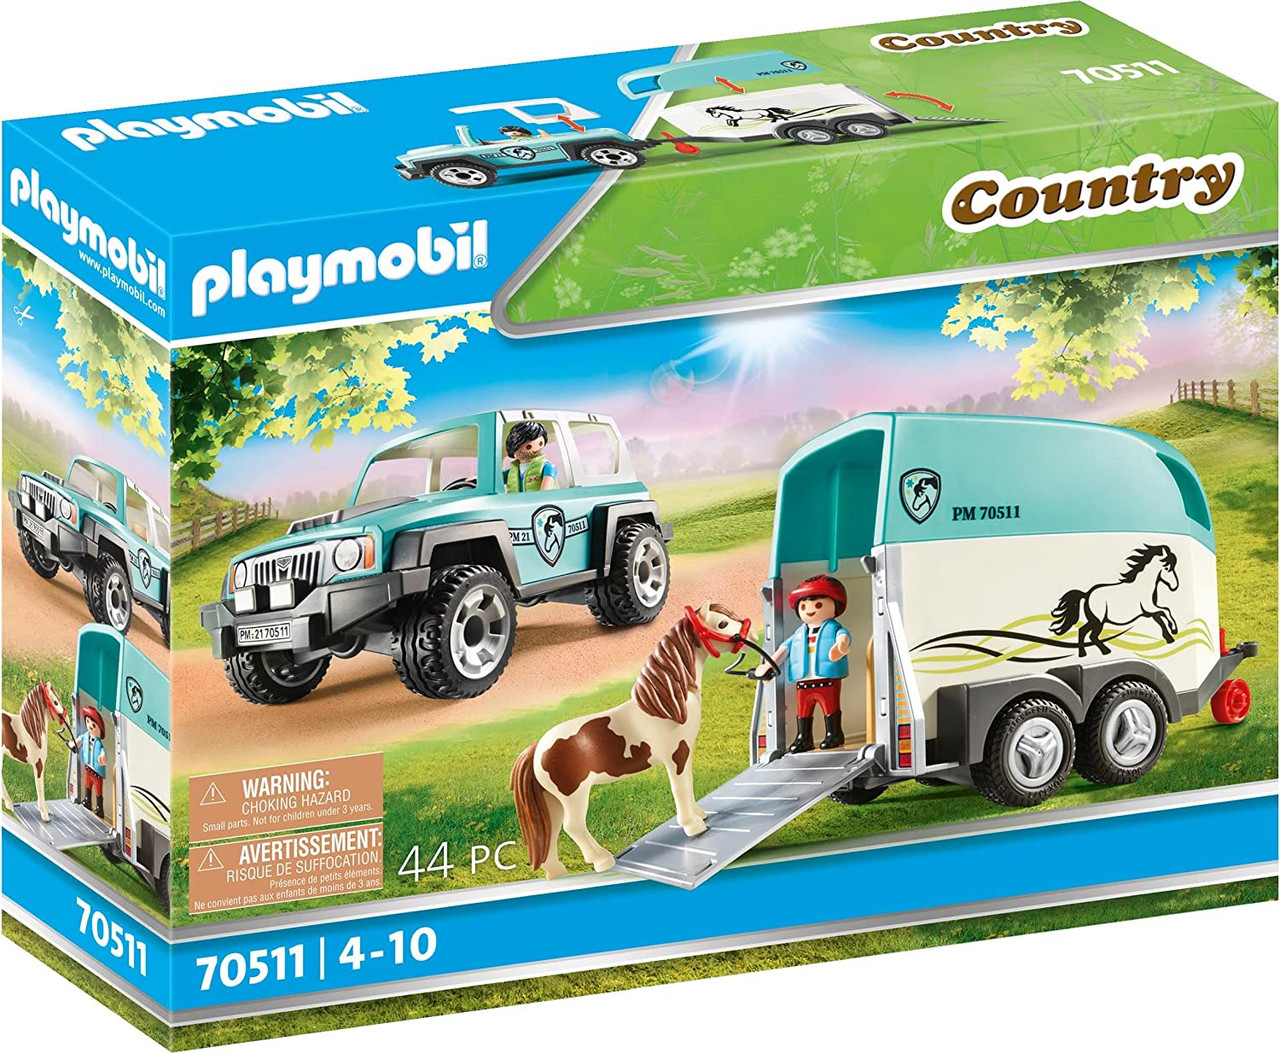 Playmobil® - Café du poney club - 70519 - Playmobil® Country